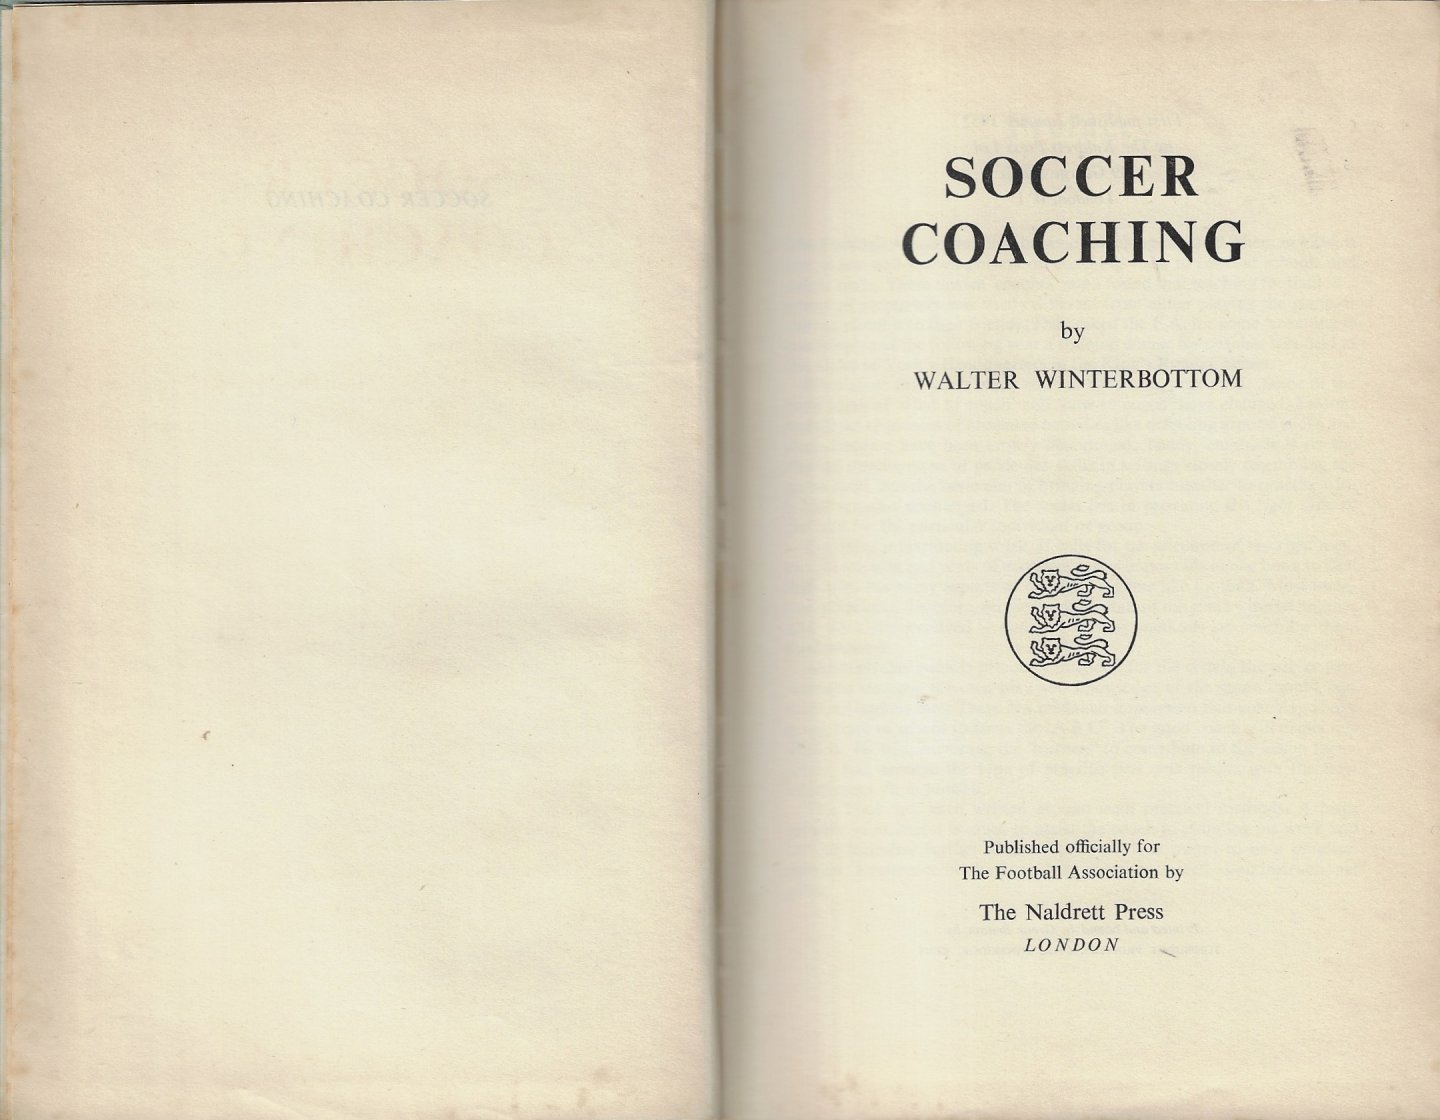 Winterbottom, Walter - Soccer coaching